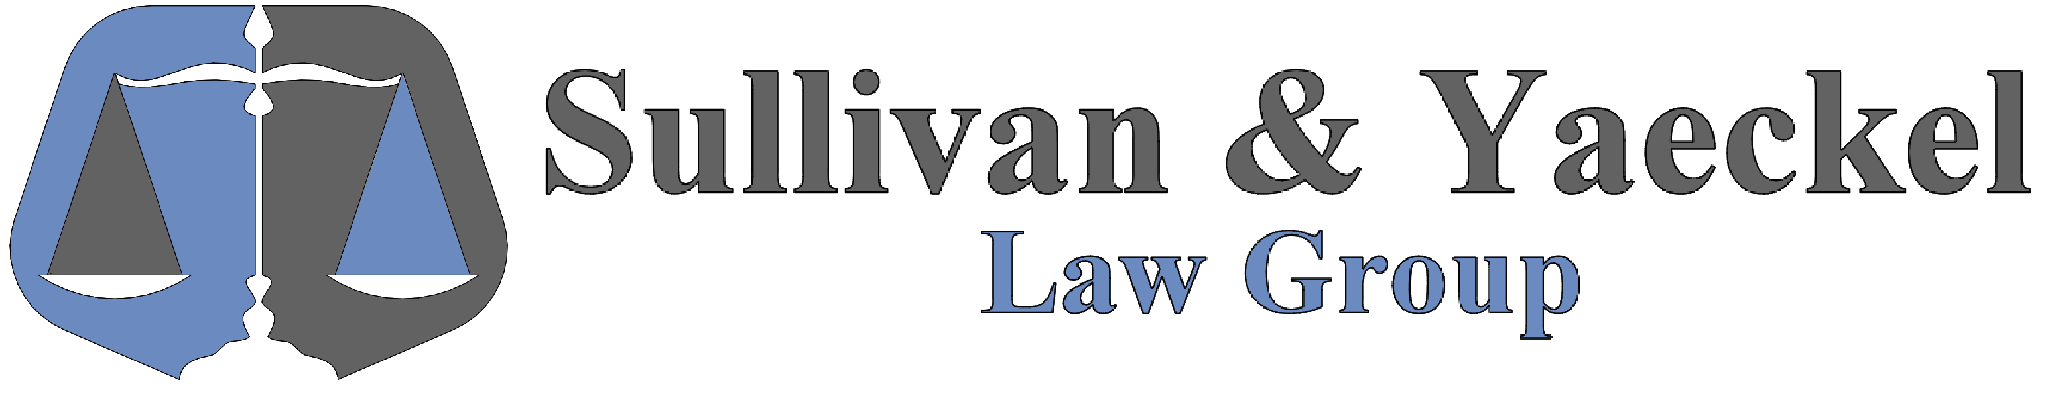 Sullivan Law Group